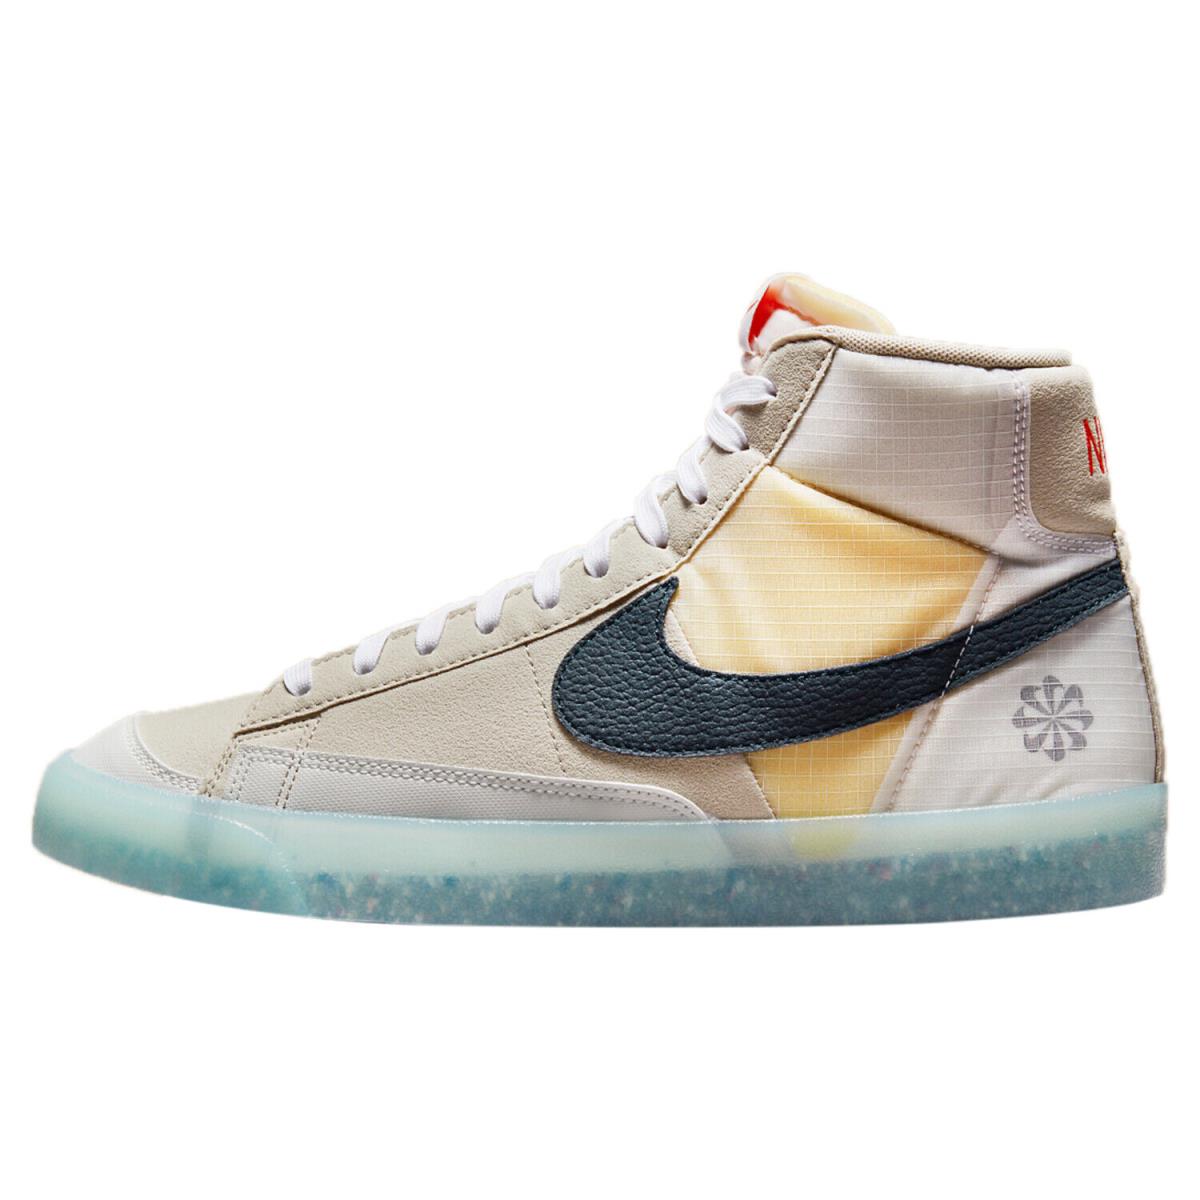 Nike Blazer Mid `77 Move To Zero Mens DH4505-200 Cream II Navy Shoes Size 8.5 - Cream II/Orange/Glacier Ice/Armory Navy